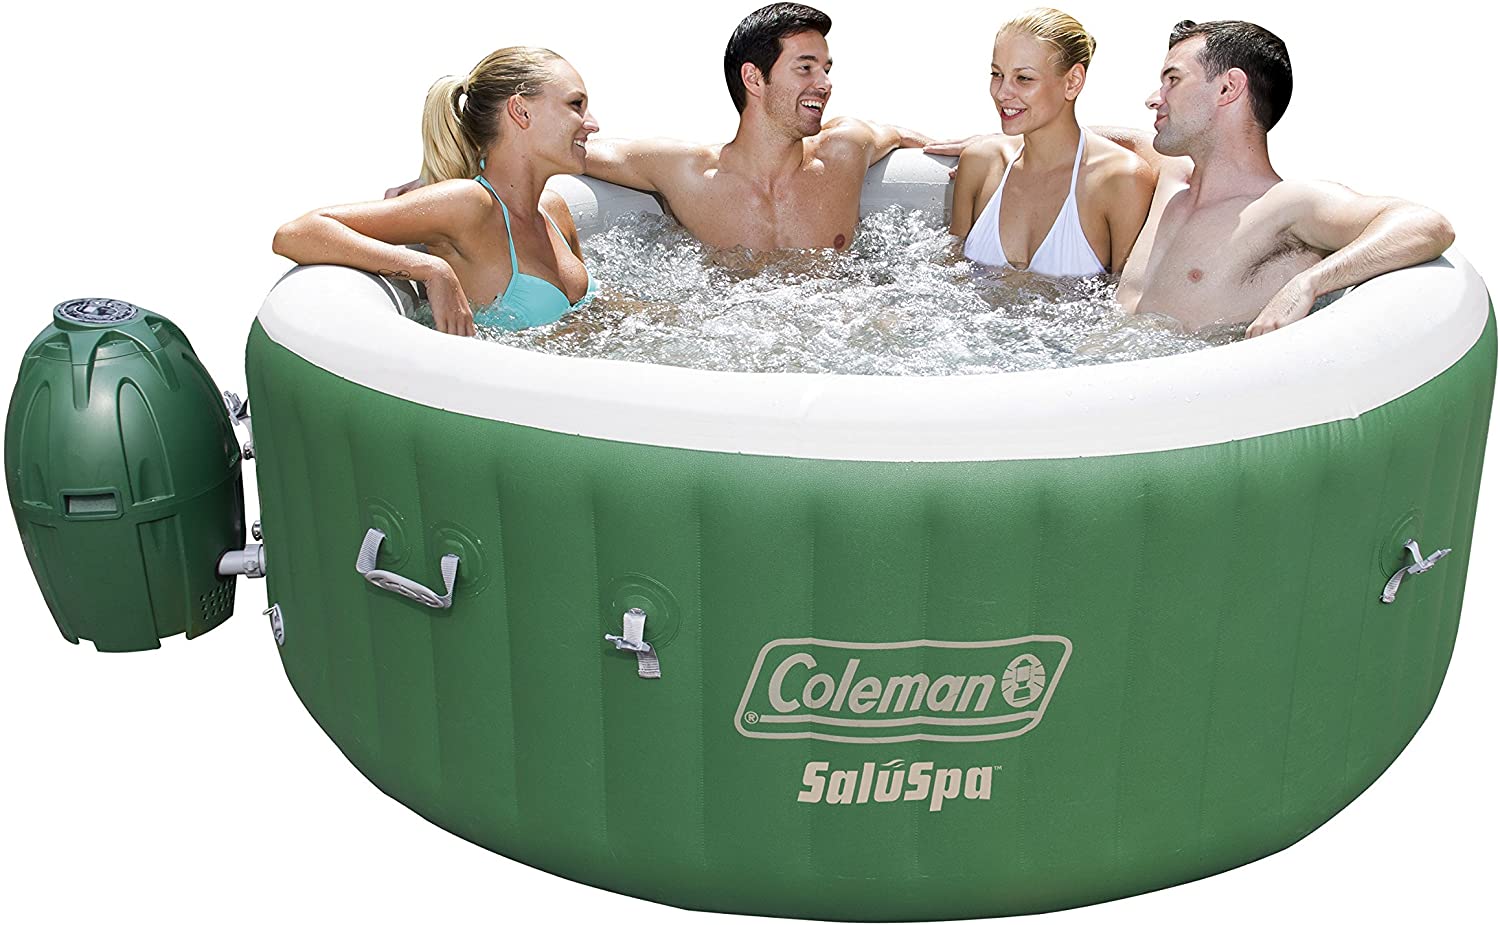 2. Coleman SaluSpa Inflatable Hot Tub Spa